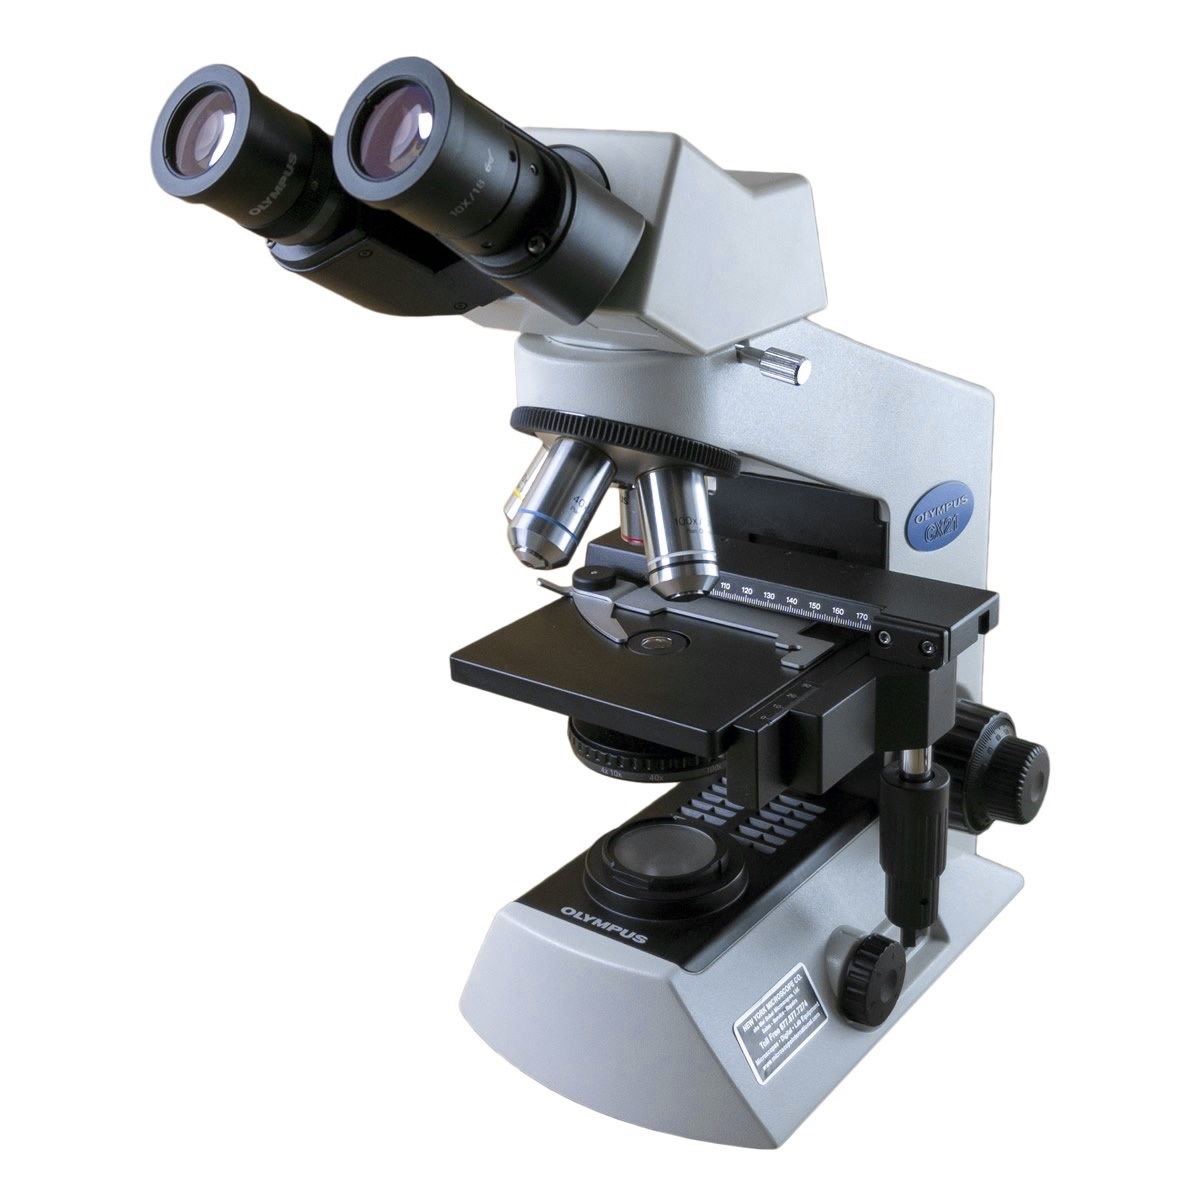 میکروسکوپ Olympus CX21